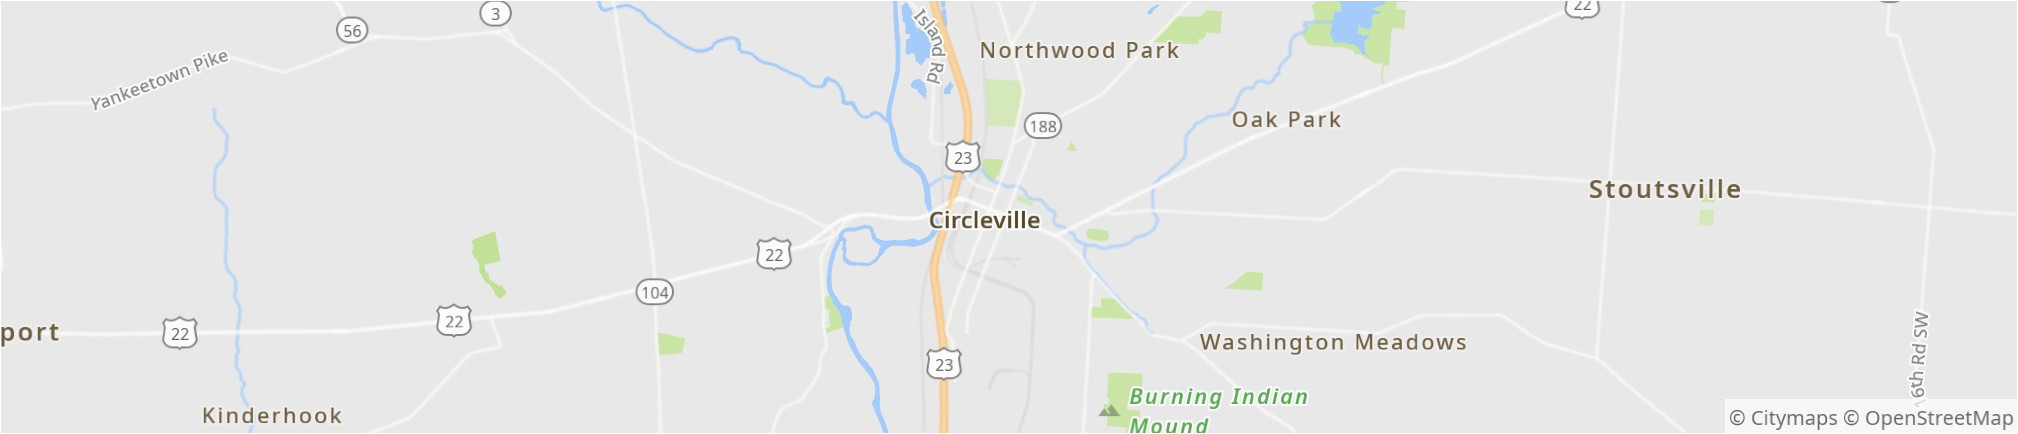 circleville 2019 best of circleville oh tourism tripadvisor